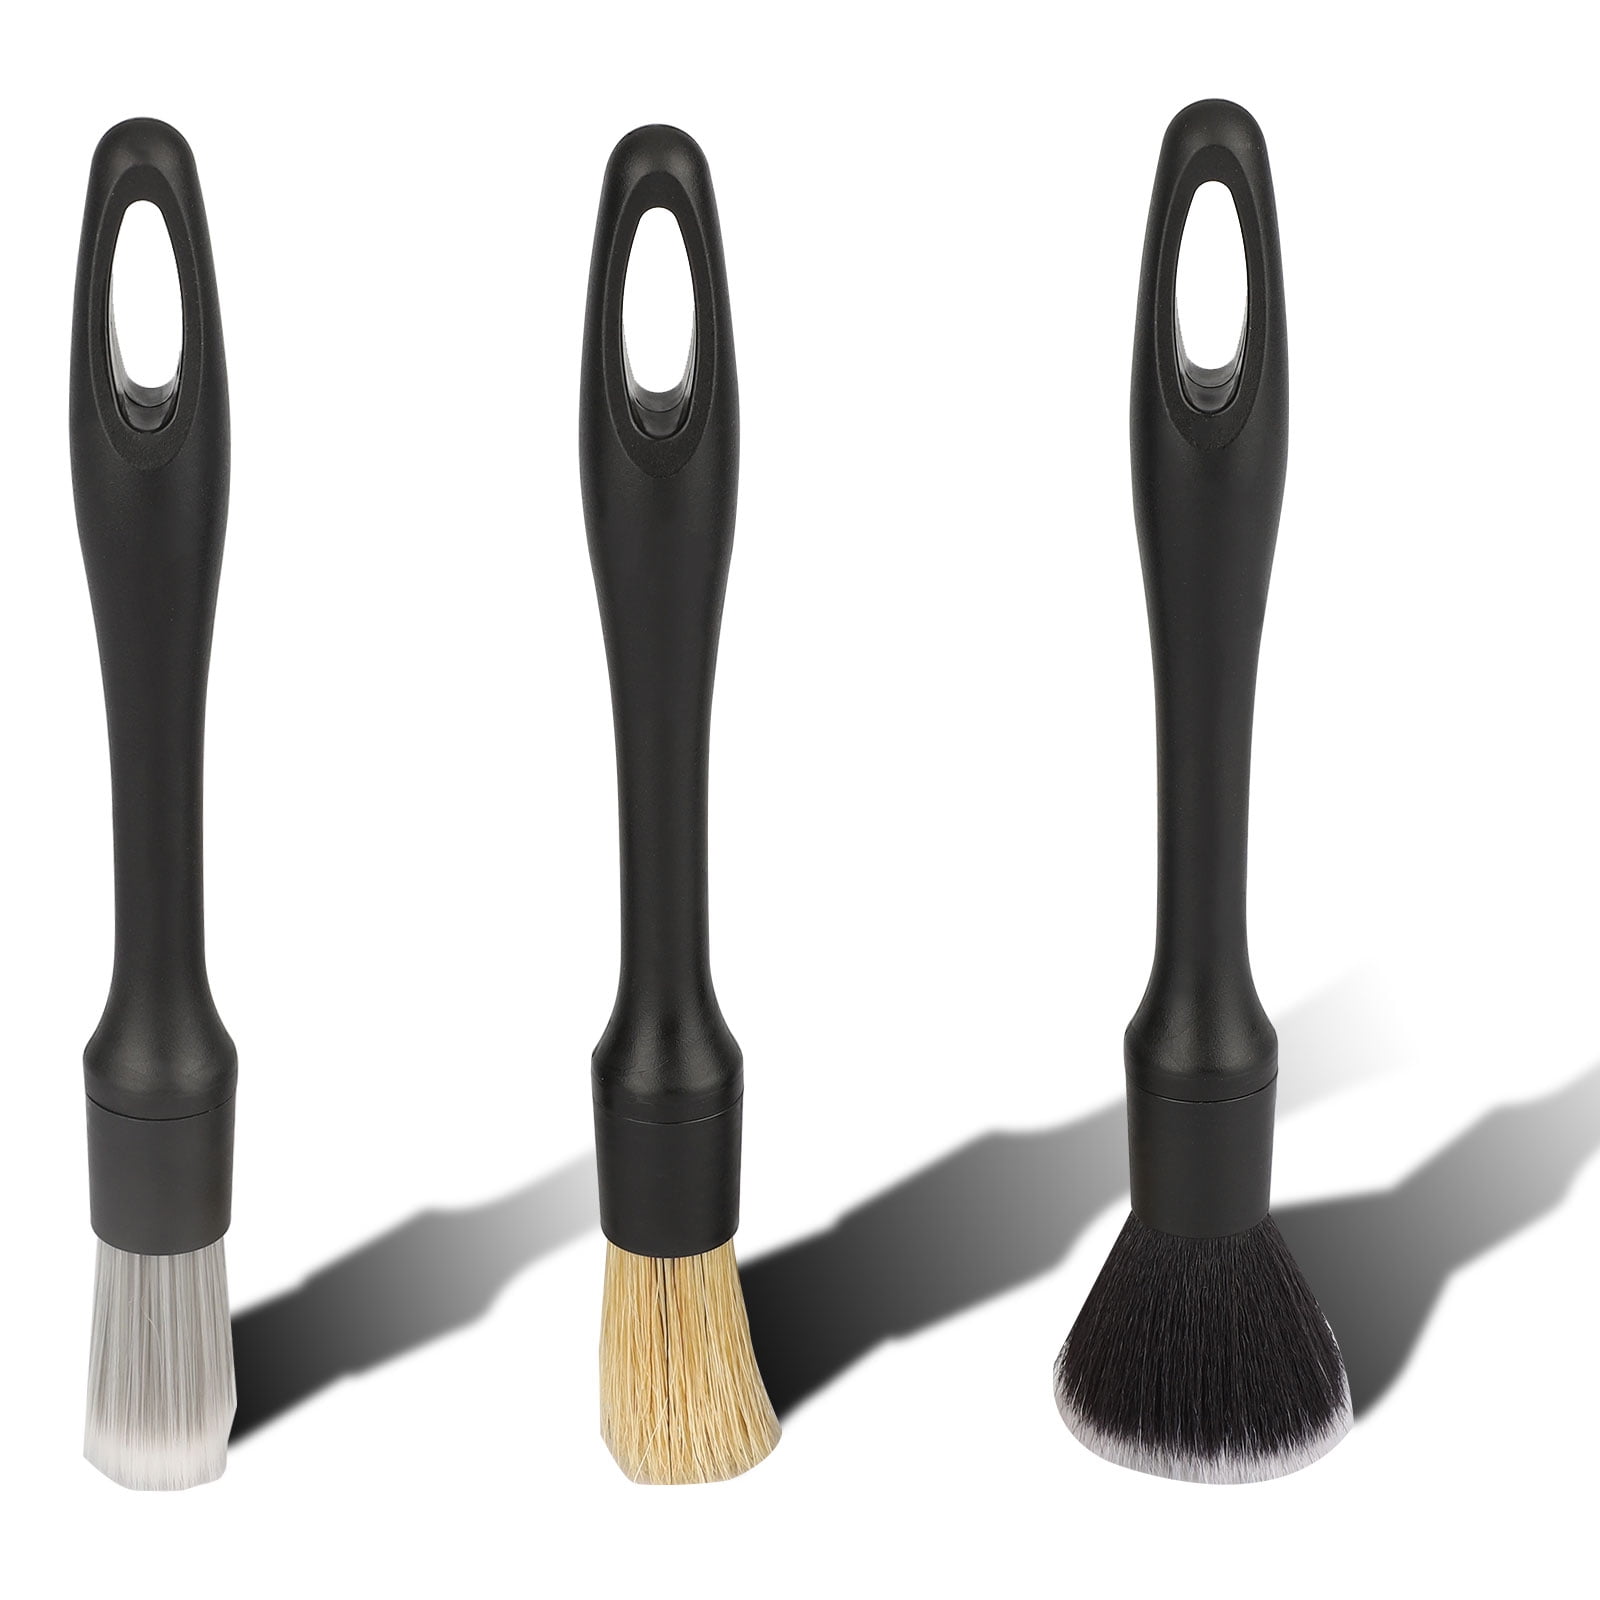 Nurkul 11 Pieces Auto Detailing Brush Set for Cleaning Wheels Interior Exterior Leather Including 6 Pcs Premium Detail Brush (Black) 3 Pcs Wire